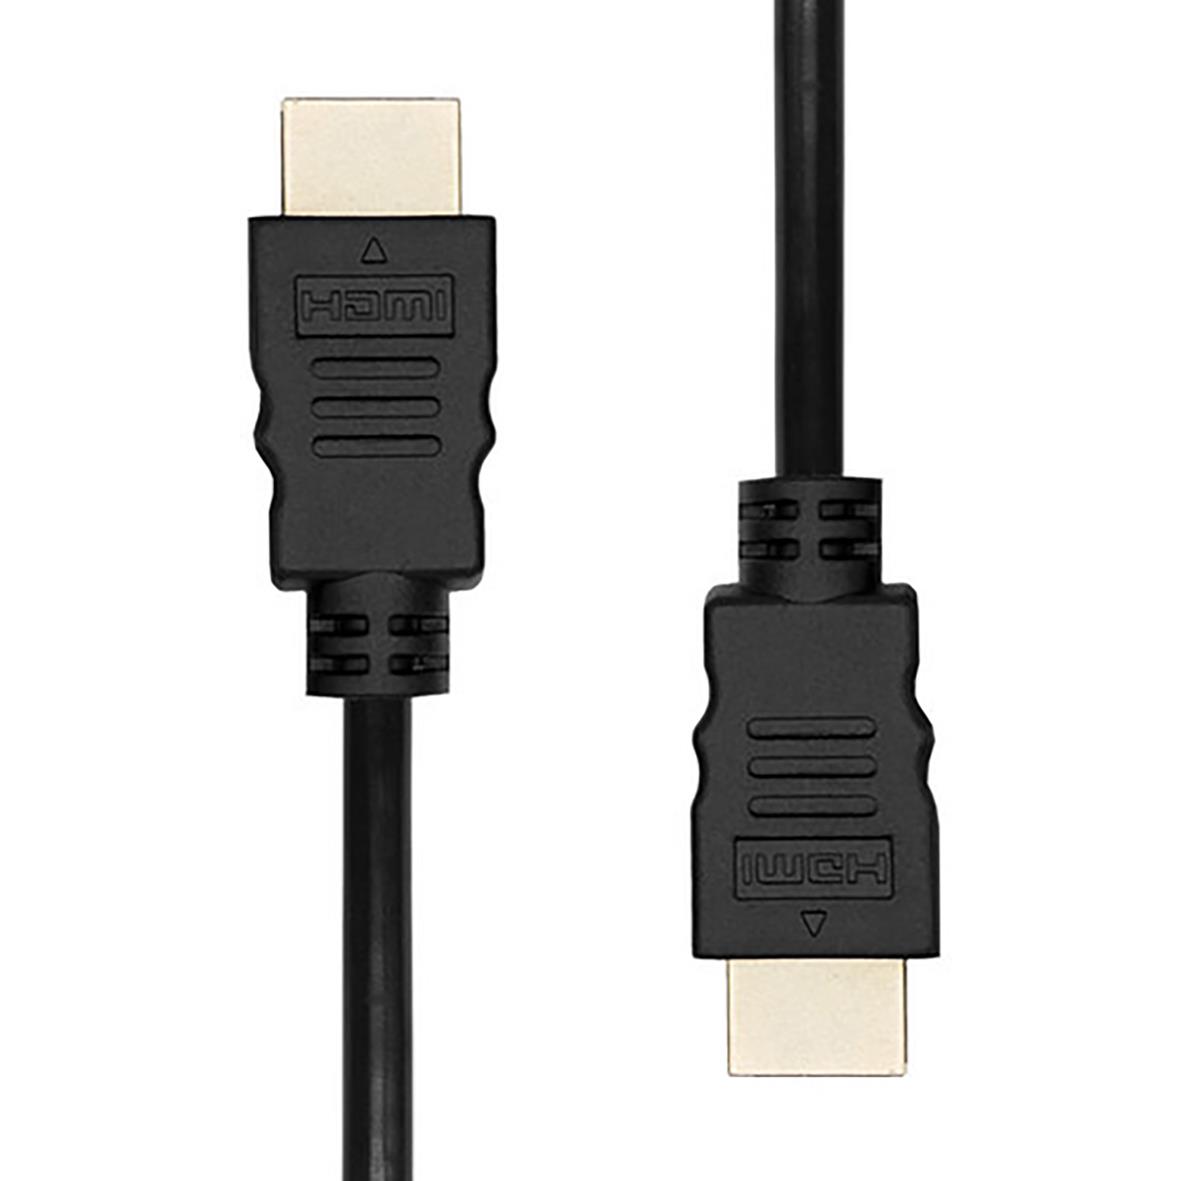 HDMI-kabel, 19-pin ha - ha 1,4 4k i 30Hz1 m 36070163_1